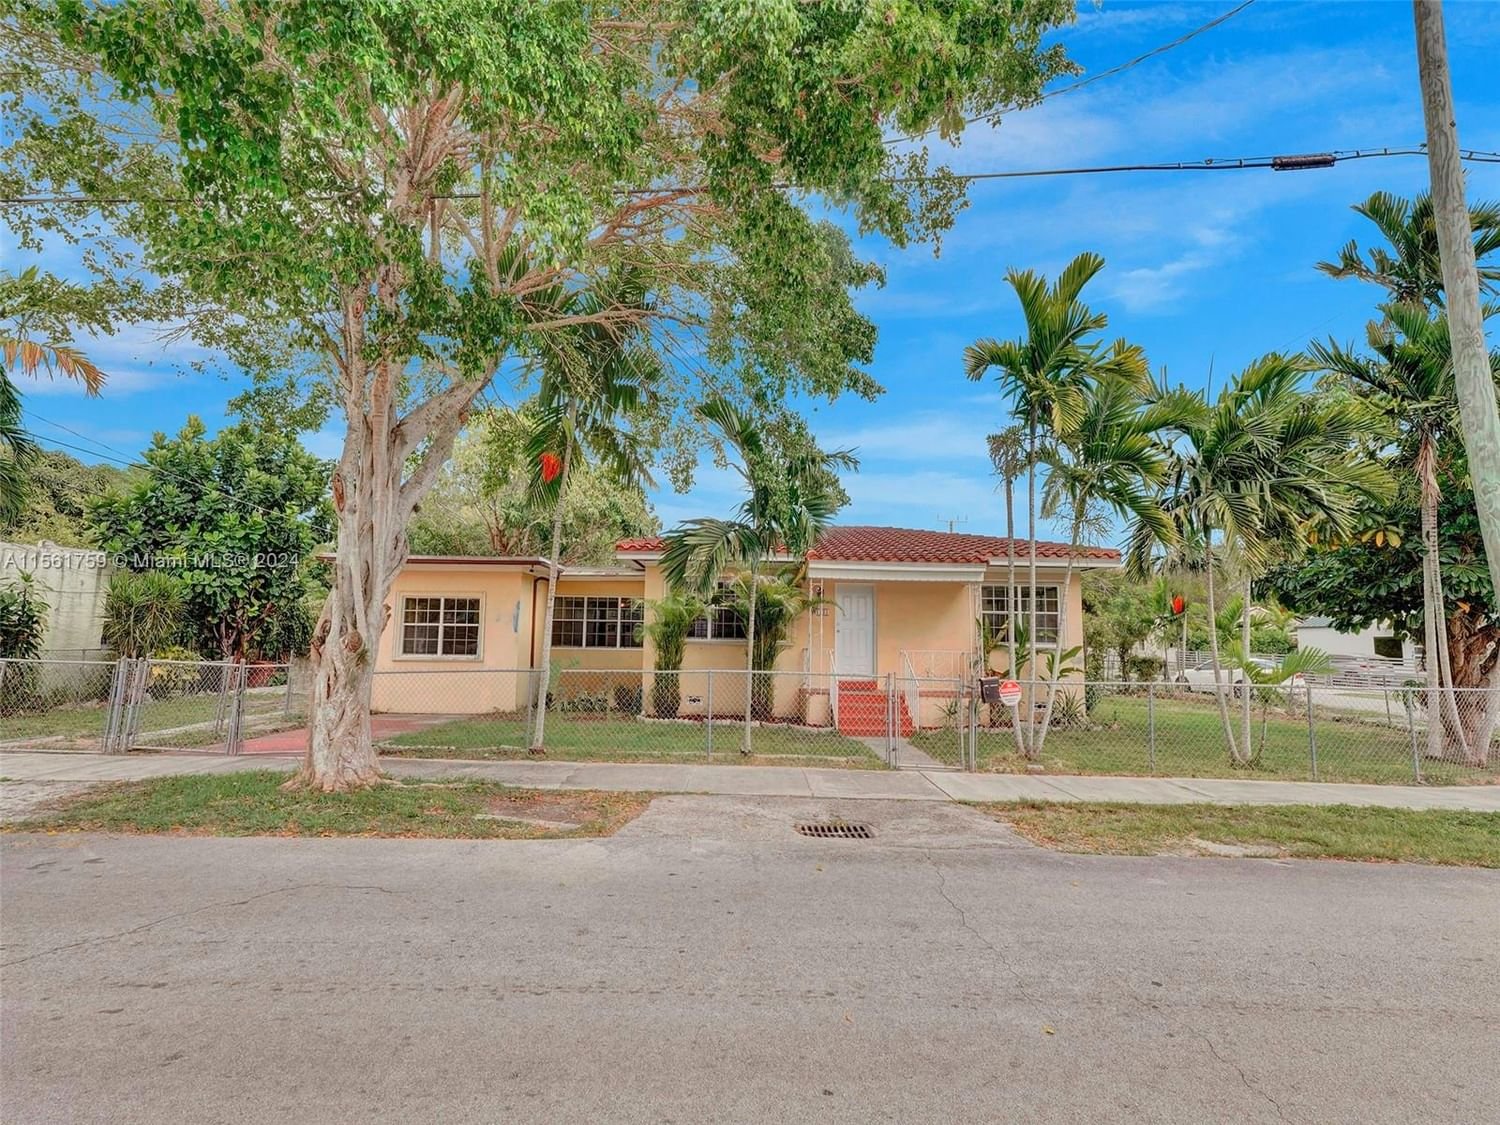 Real estate property located at 1121 36th Ave, Miami-Dade County, TAMIAMI PINES, Miami, FL